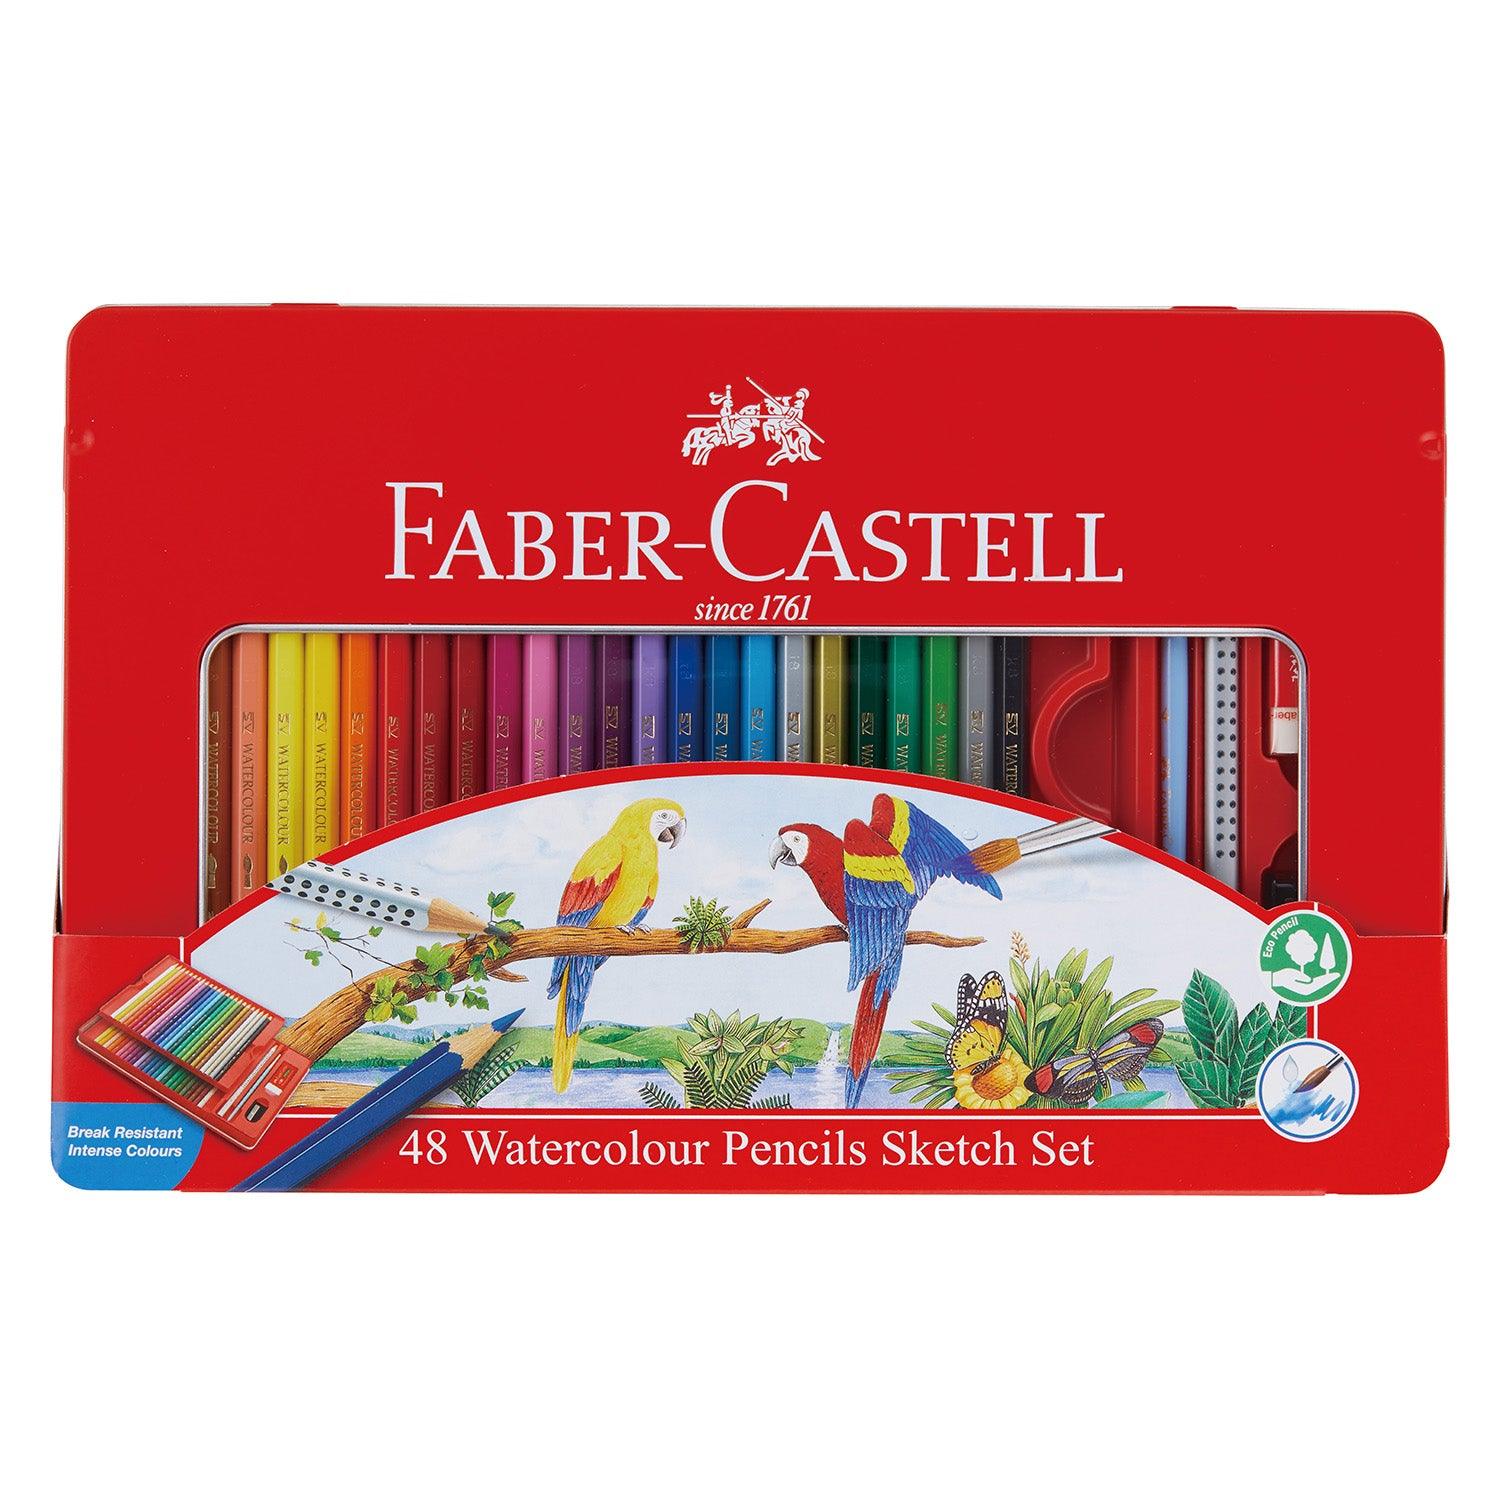 Faber-Castell Watercolour 36 pc Color Chart by Ishimaru-Chiaki on DeviantArt